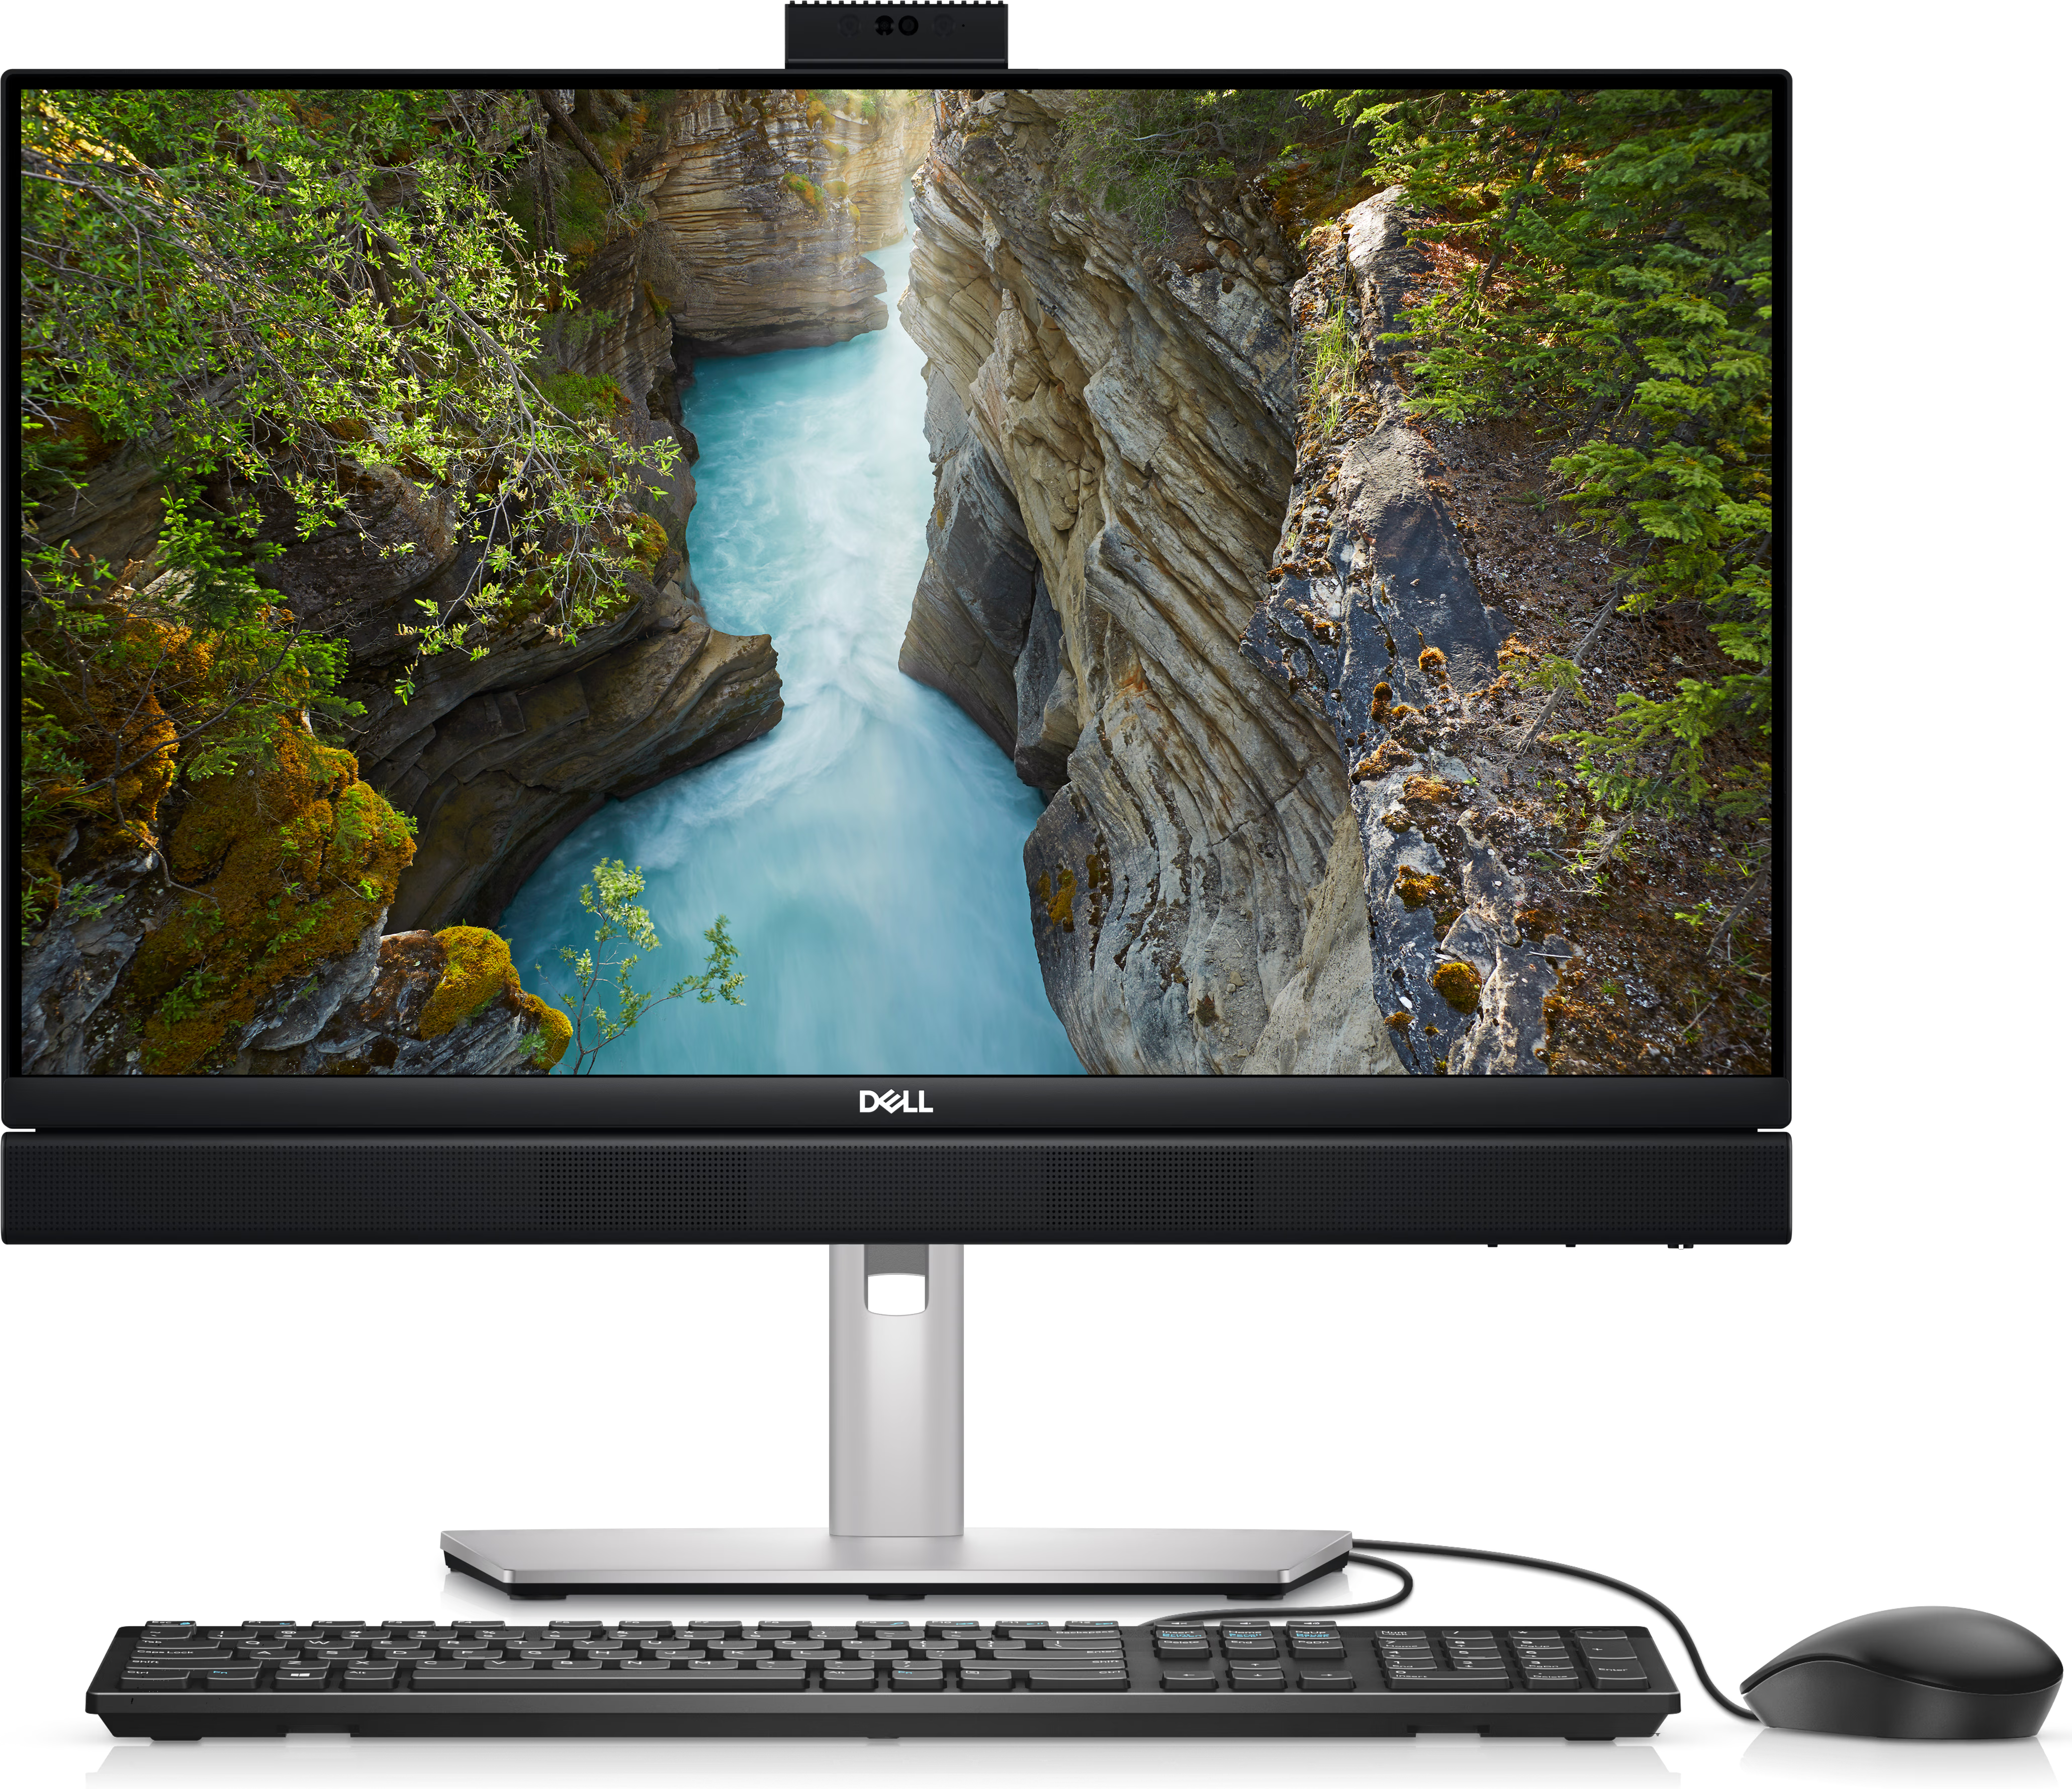 Dell OptiPlex 7410 23.8in FHD All-in-One PC